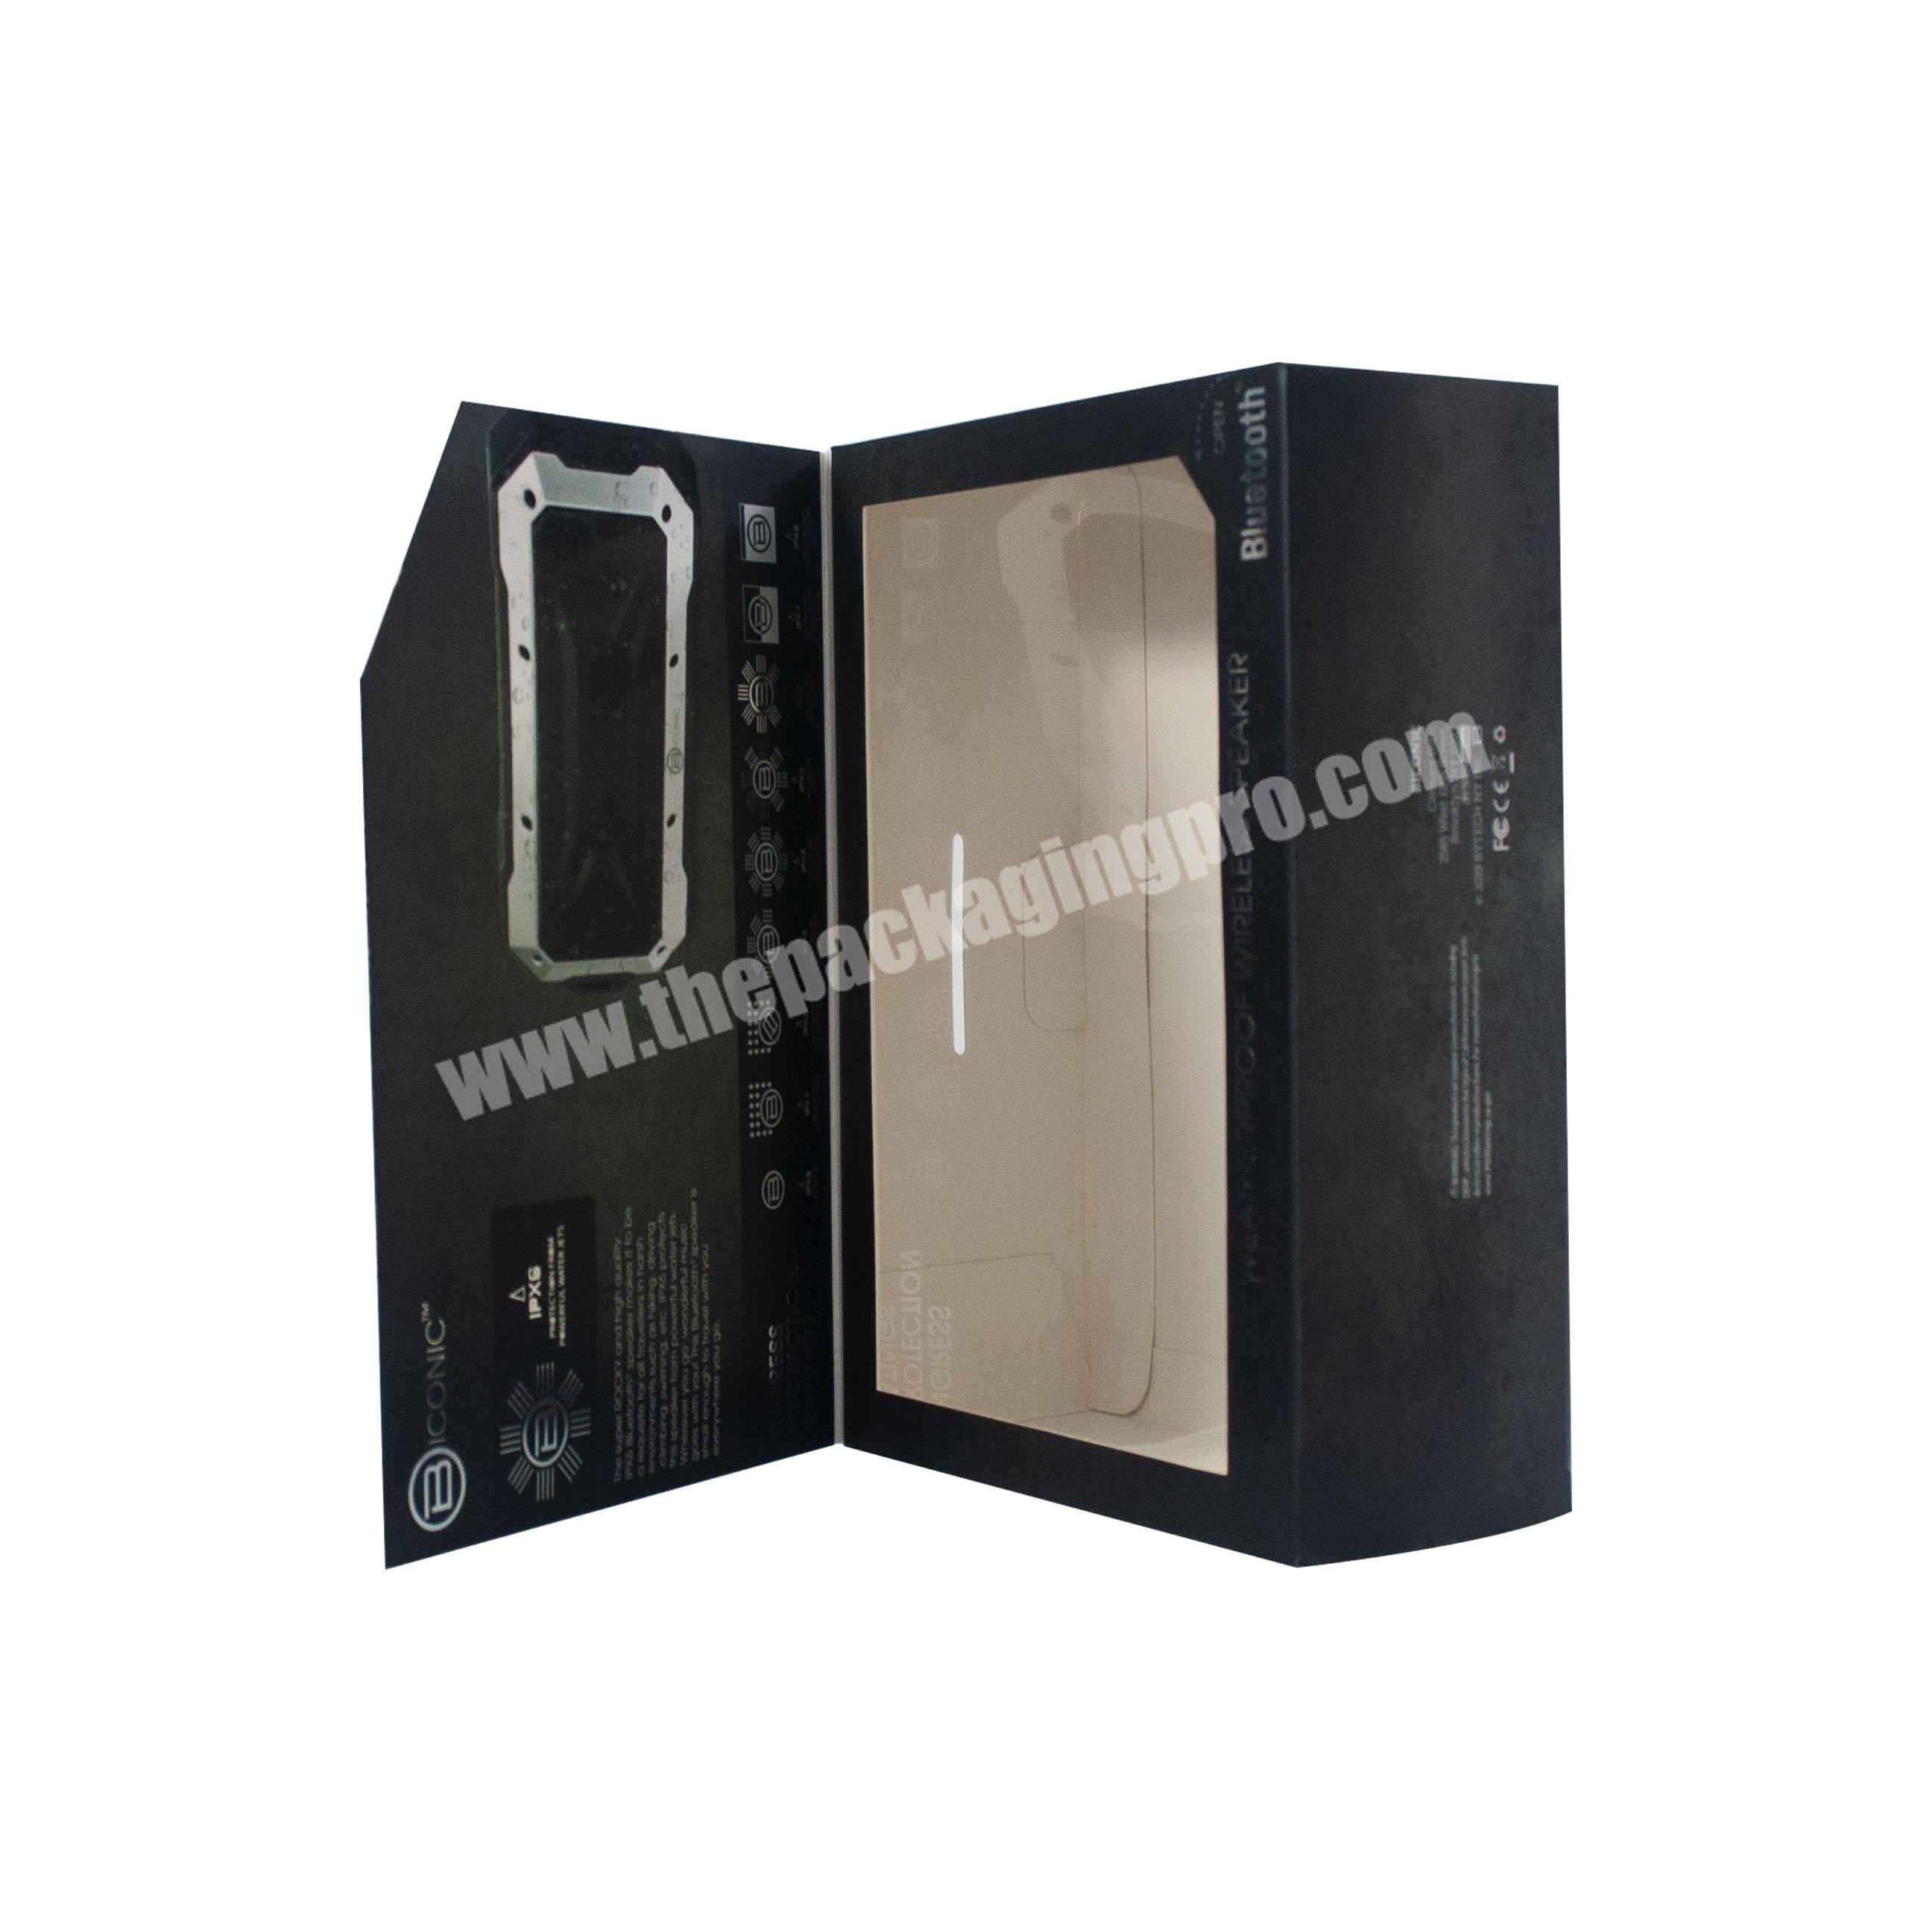 Design custom magnetic bluetooth speaker black box packaging box